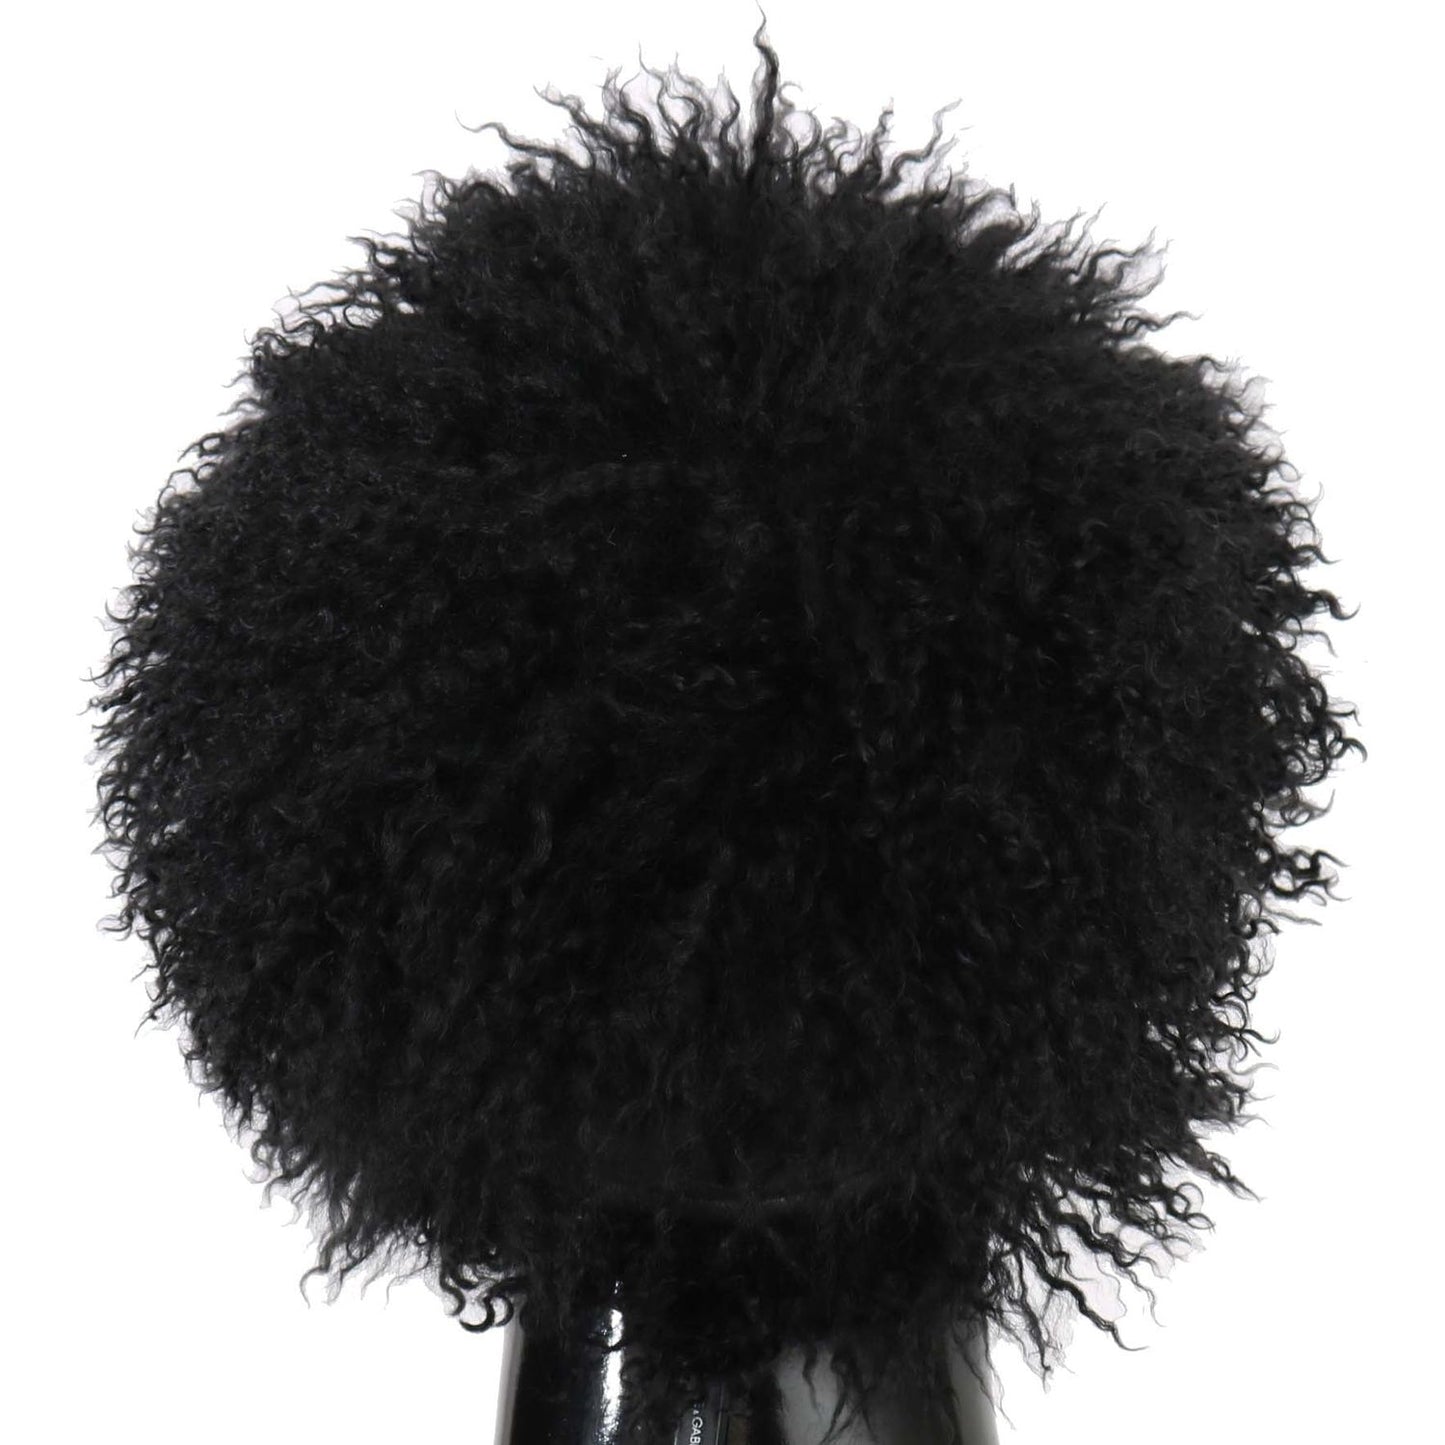 Dolce & Gabbana Black Tibet Lamb Fur Leather Gatsby Hat black-tibet-lamb-fur-leather-gatsby-hat Hat IMG_0188-2.jpg